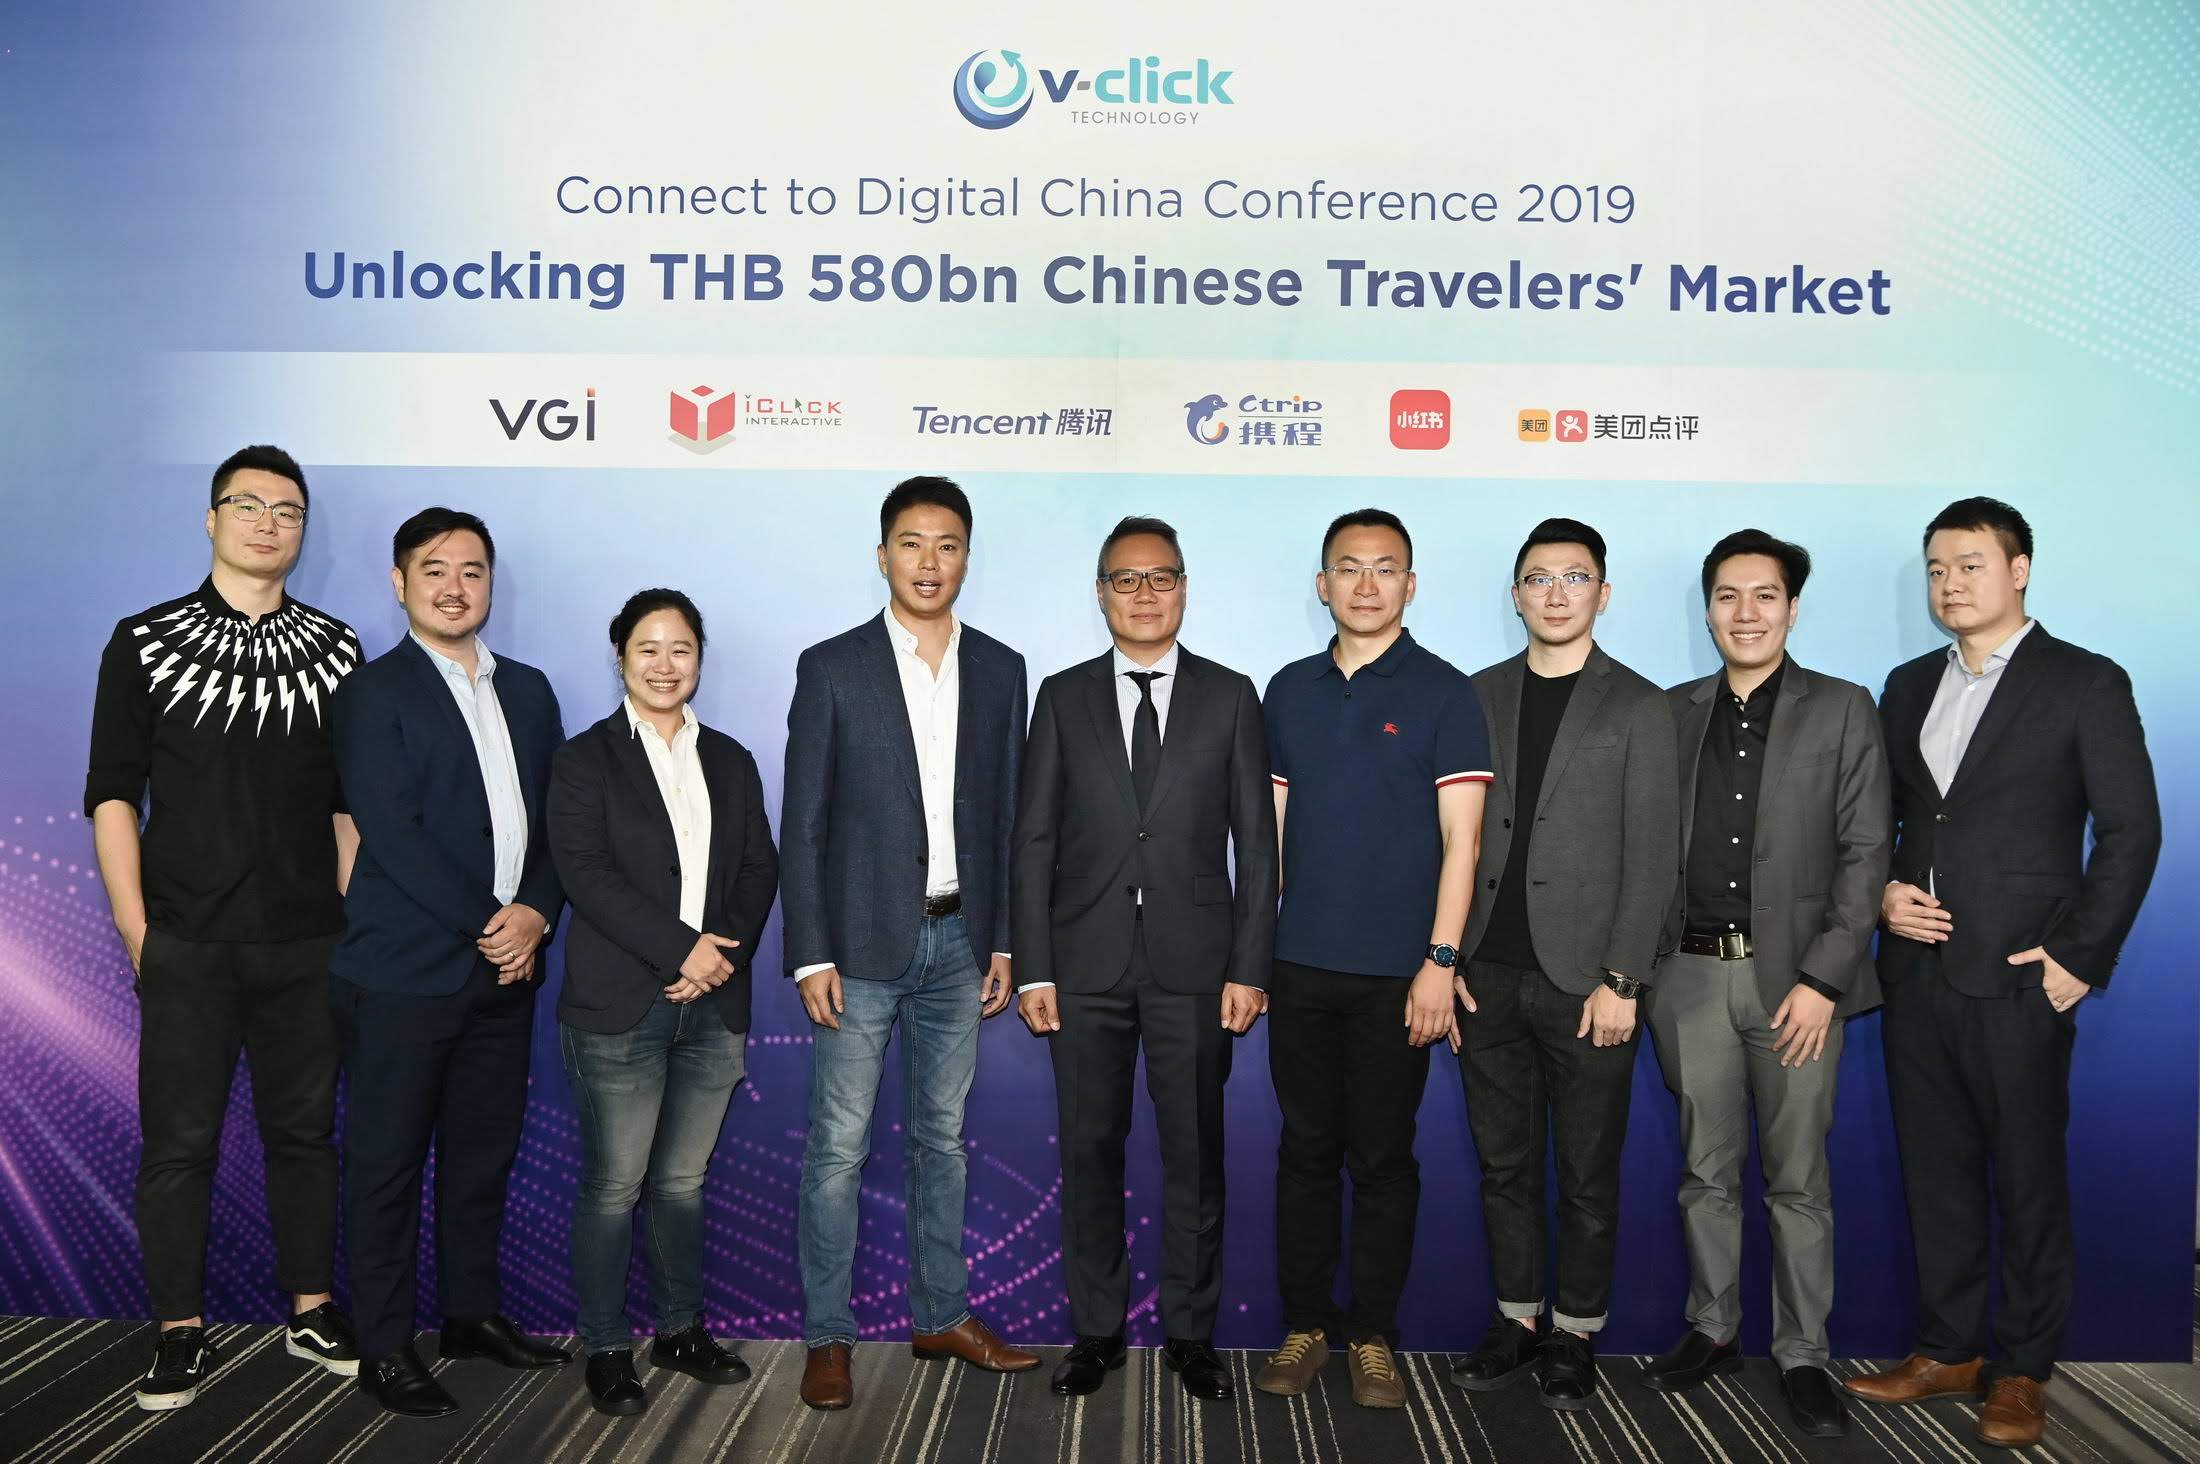 VGI และ iClick Interactive ร่วม เปิดตัว V-Click Technology อย่างเป็นทางการ ปลดล๊อคตลาดนักท่องเที่ยวจีนมูลค่ากว่า 5 แสนแปดหมื่นล้านบาท